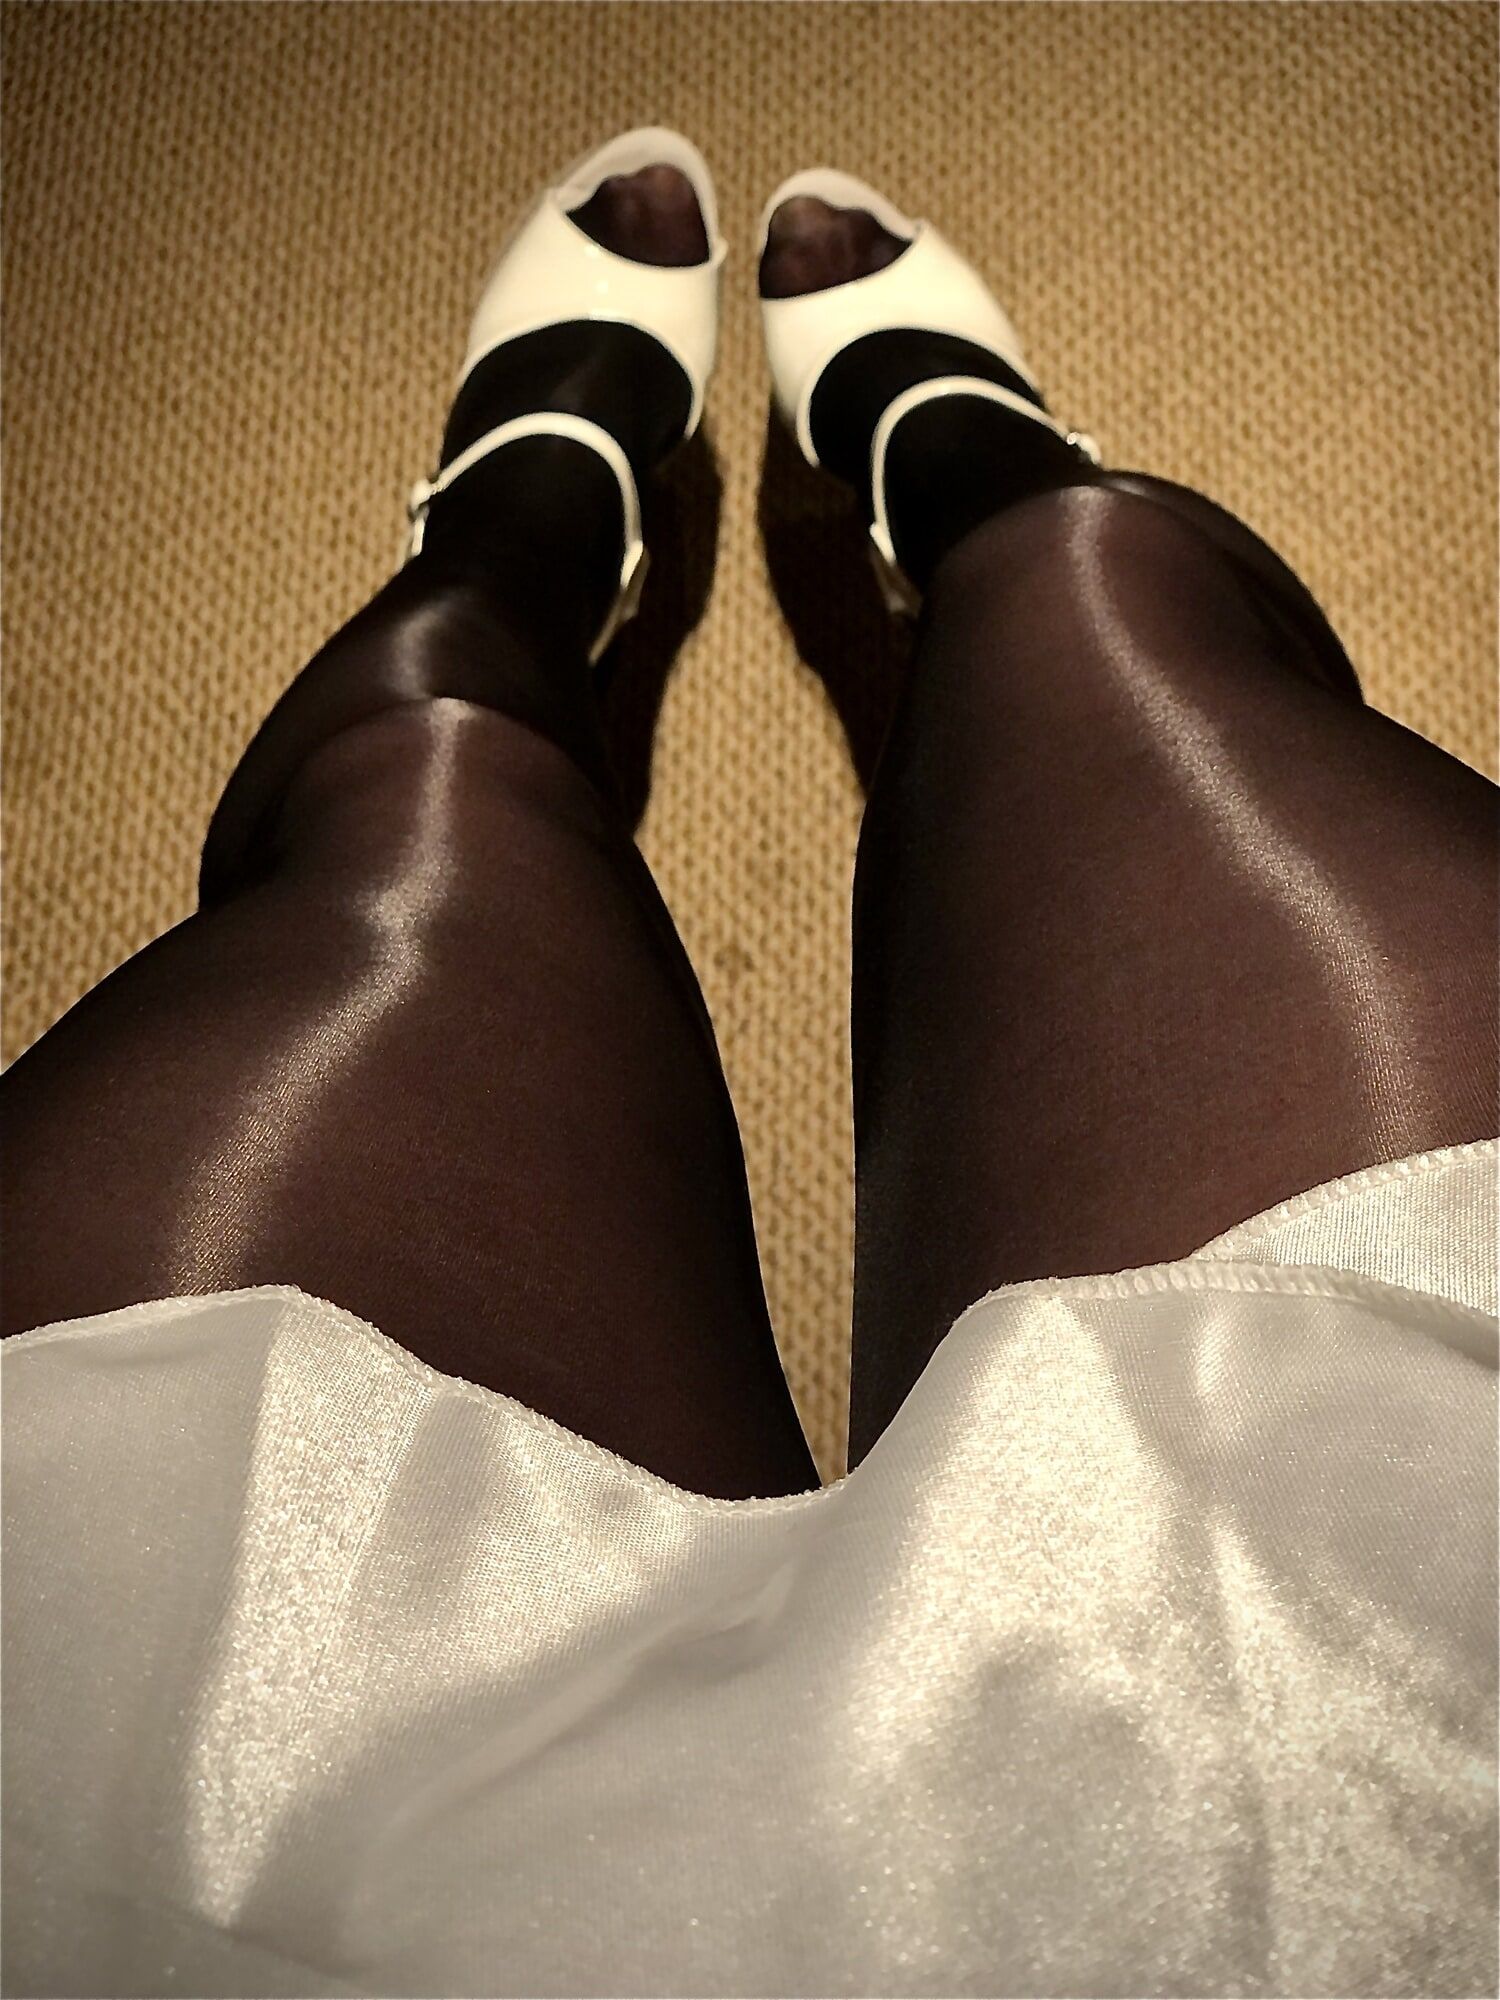 My shiny sheer glossy black pantyhose and white super heels #5